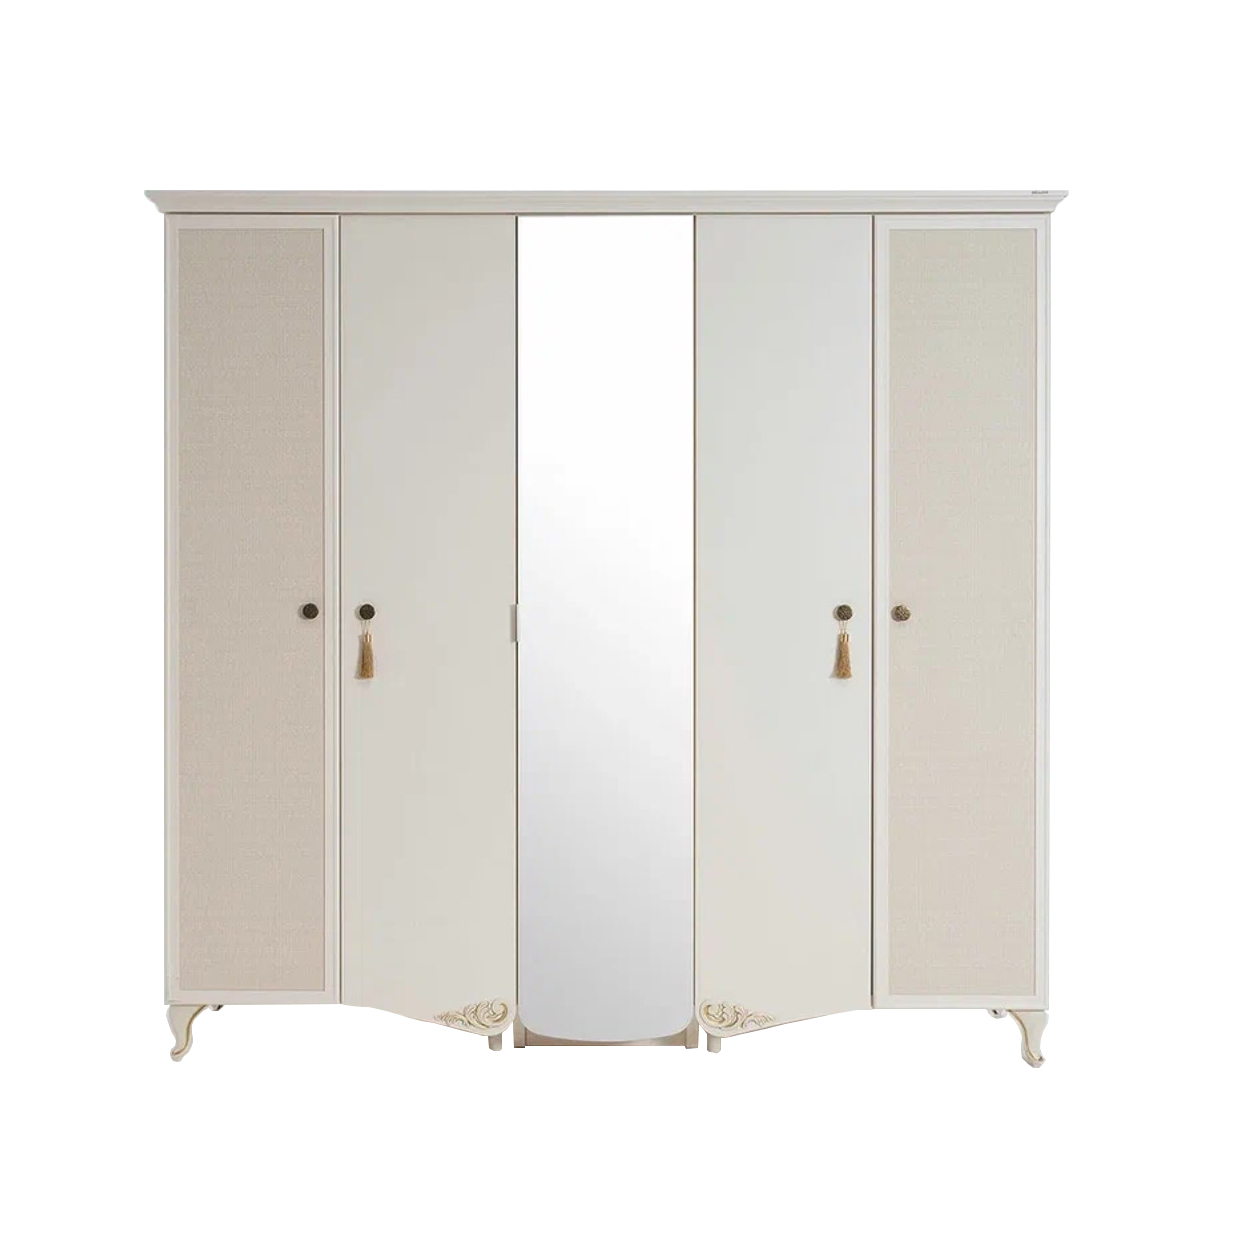 Шкаф Bellona Perlino, пятидверный, цвет: белый, размер 231х63х222 см (PERL-33)PERL-33